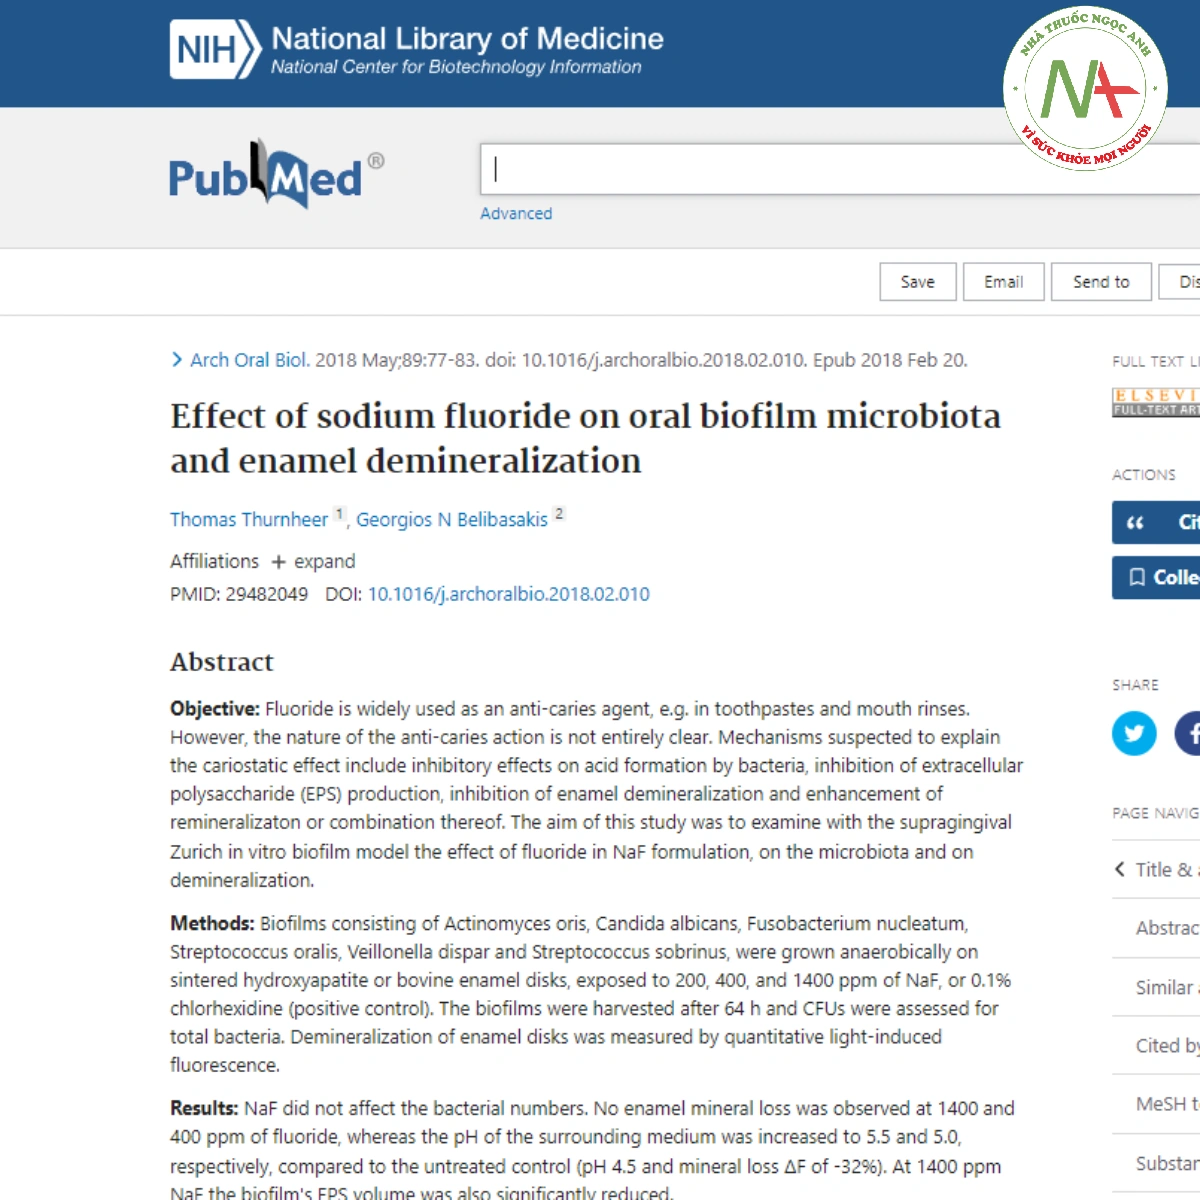 Effect of sodium fluoride on oral biofilm microbiota and enamel demineralization